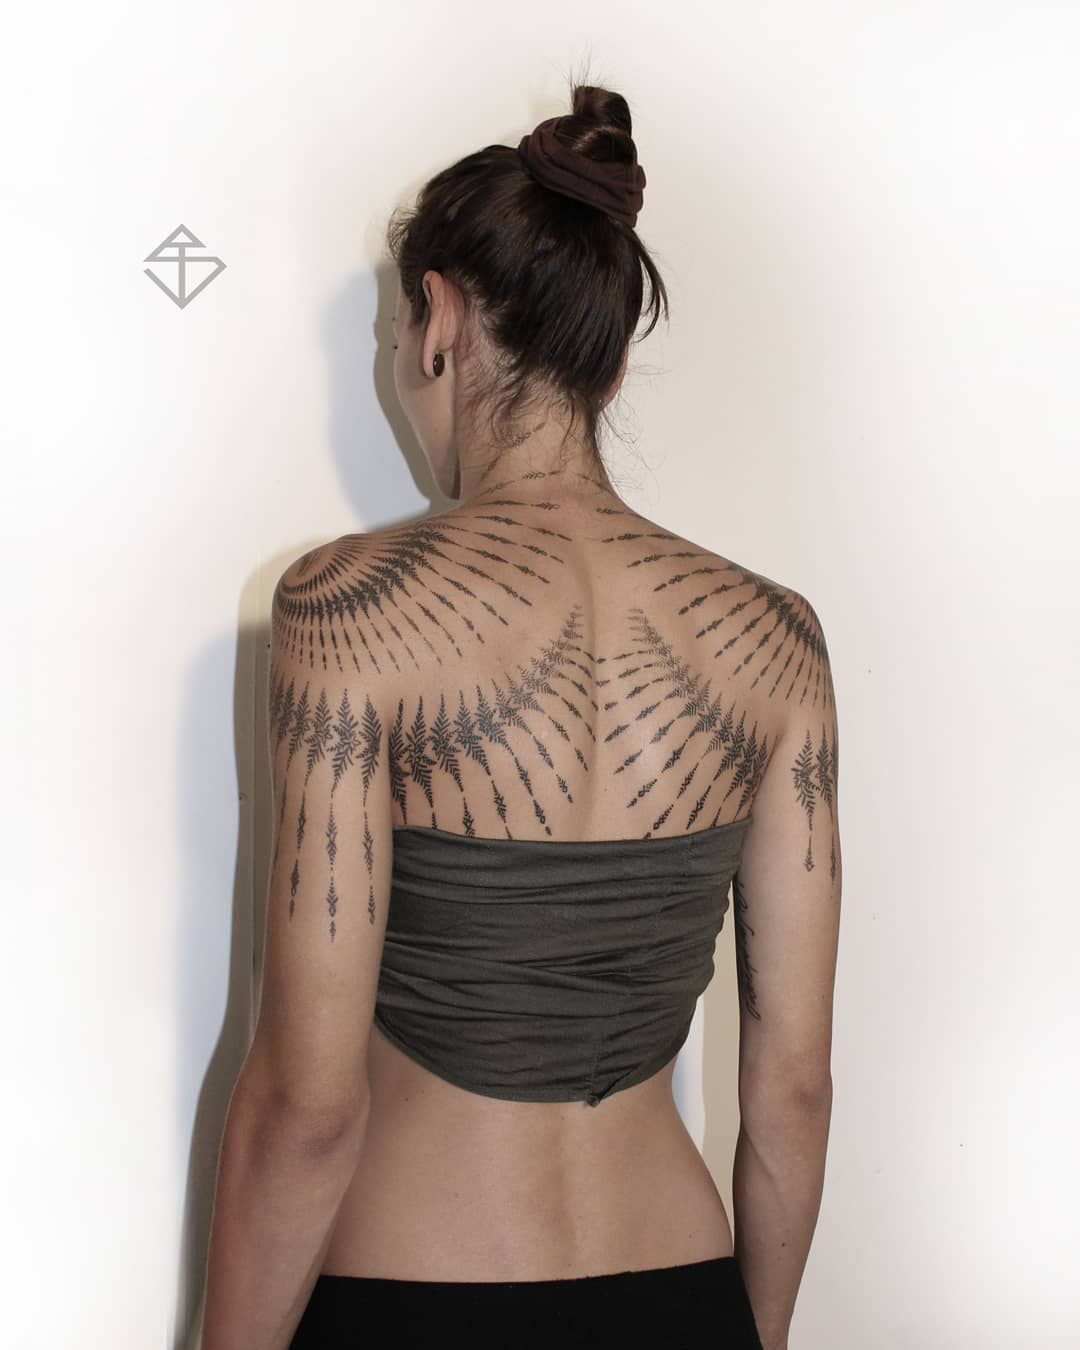 Cool Tribal Tattoos Designs (18)